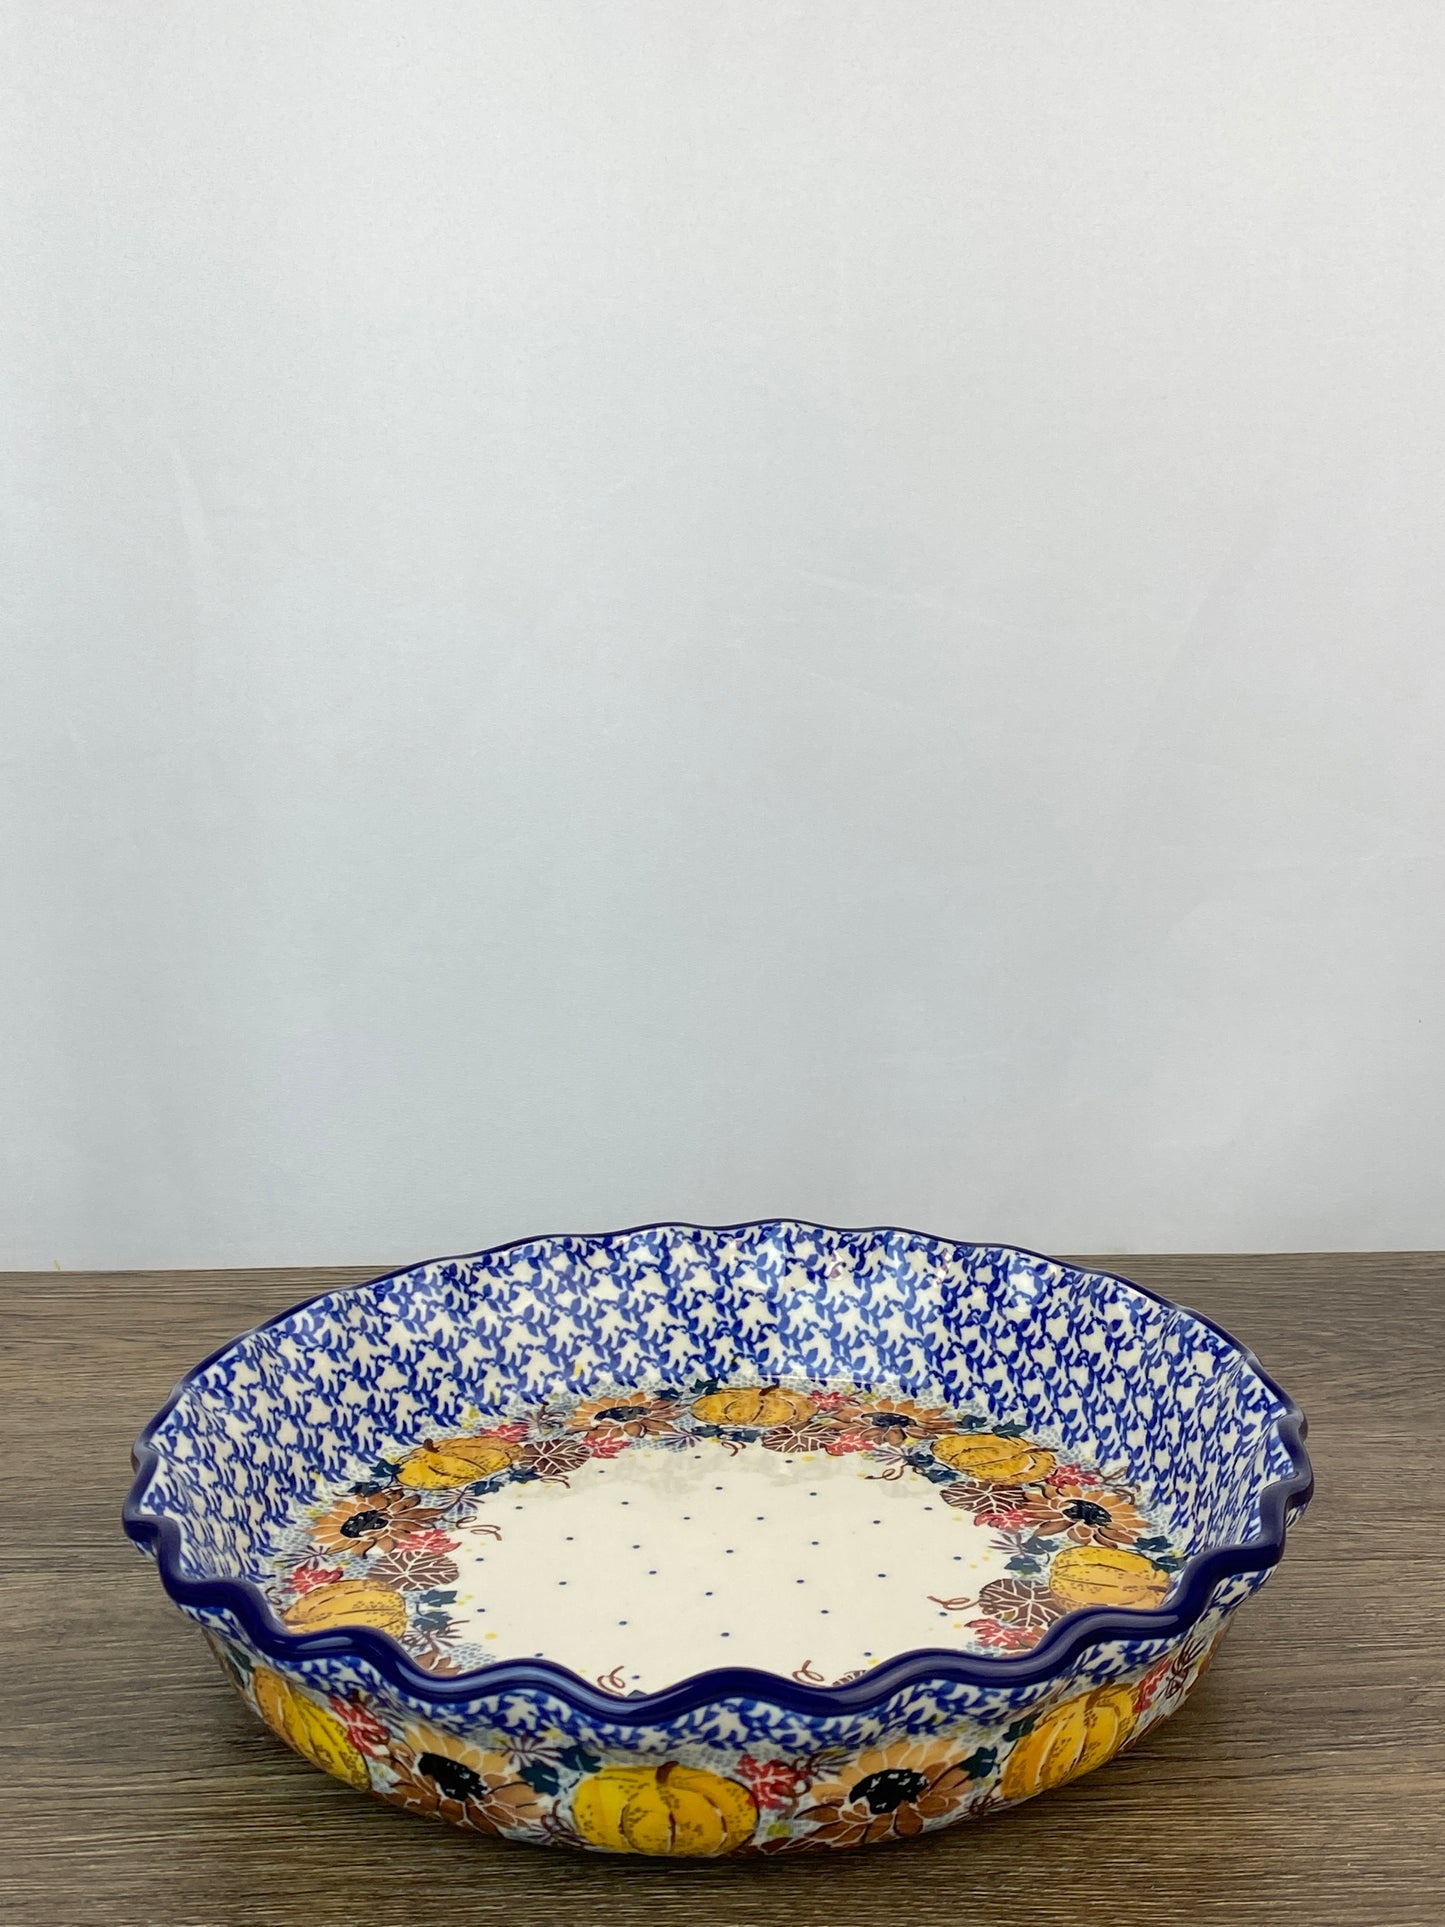 Ruffled Unikat Pie Plate / Round Baker - Shape 636 - Pattern U4741